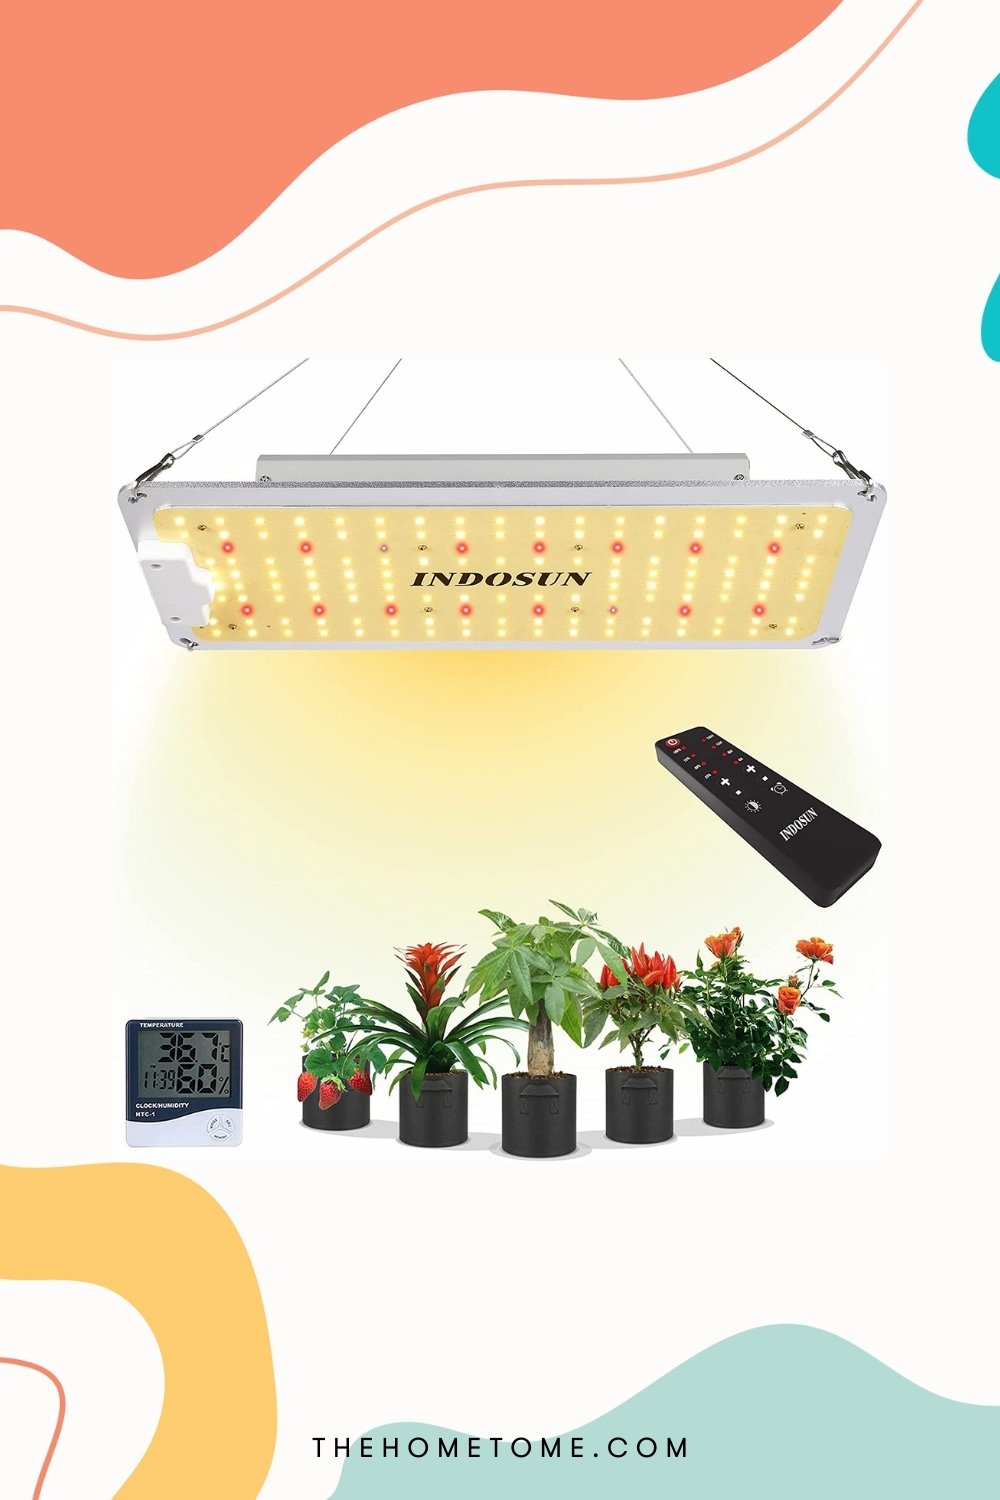 INDOSUN 600W LED Grow Light